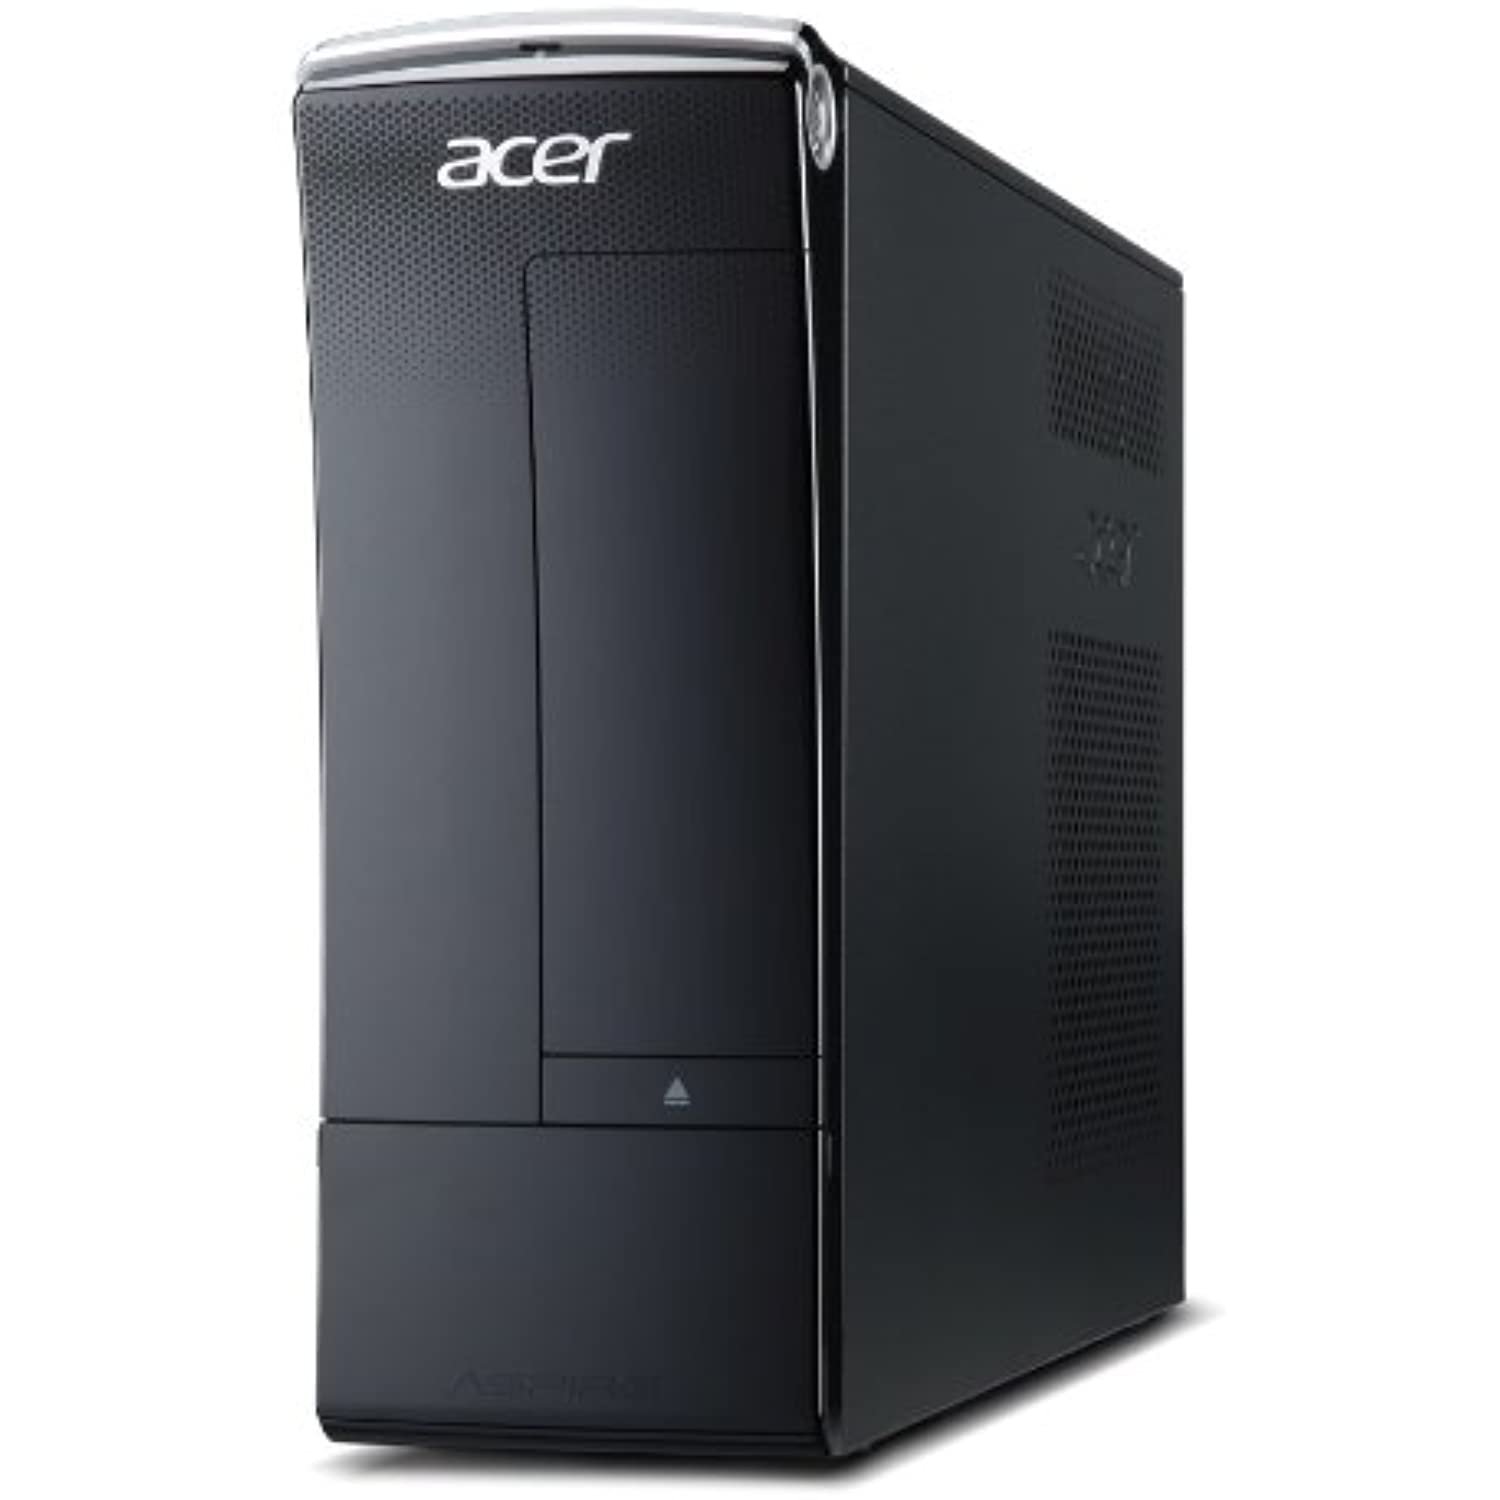 Пк aspire. Компьютер Acer Aspire x3810. Acer Aspire x3995. Acer Aspire ax3900. Acer Aspire TC-1660.